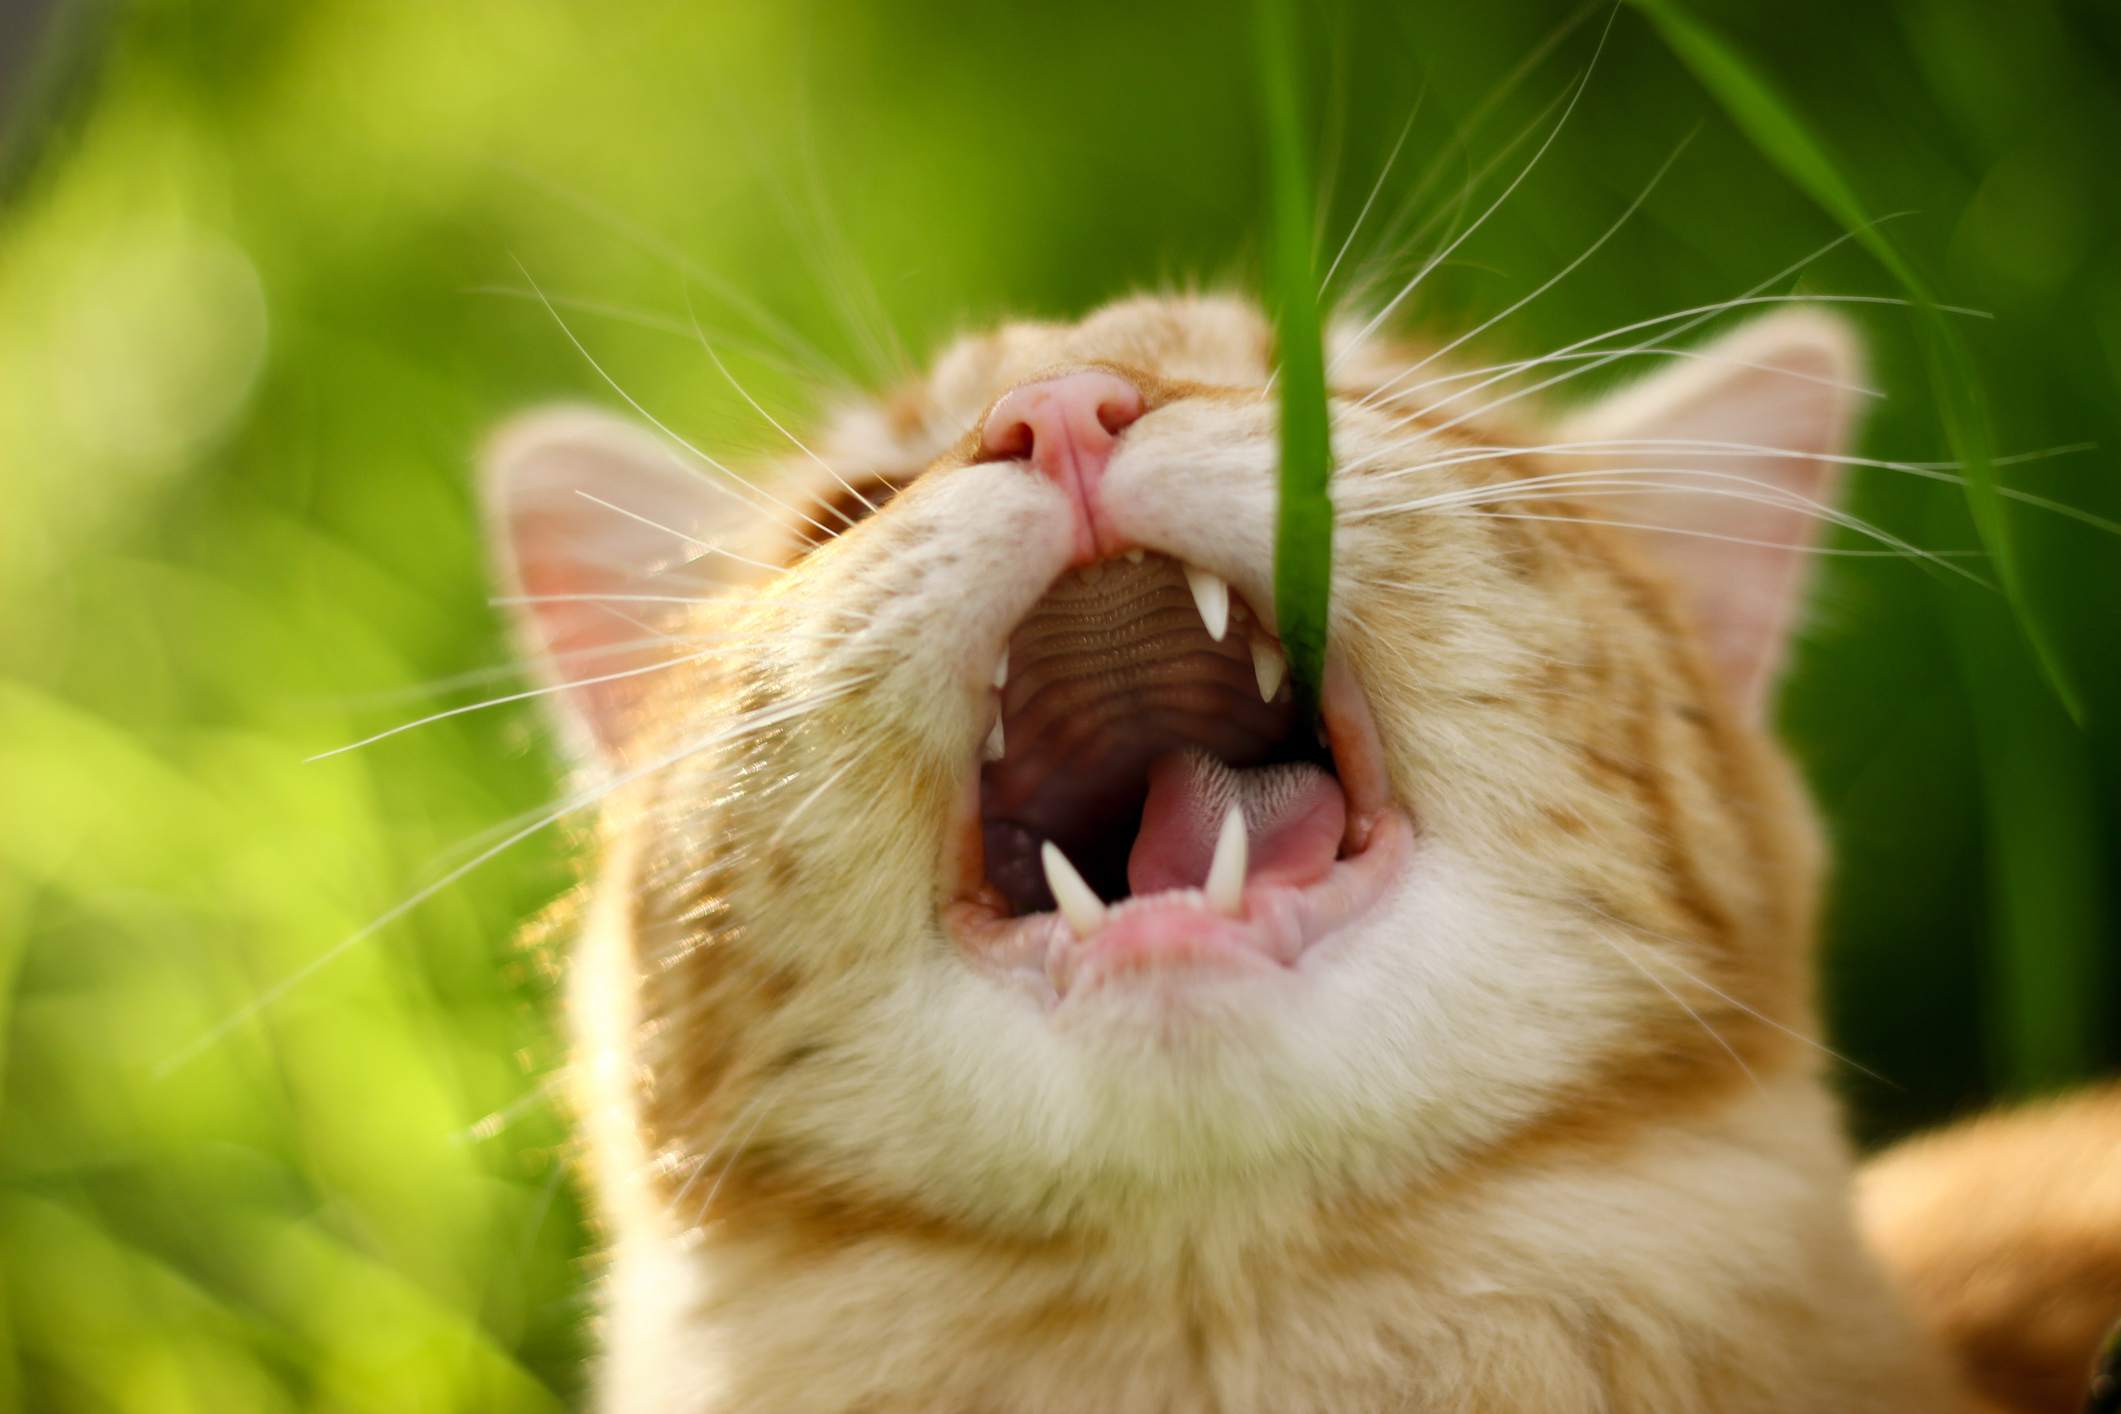 Cat eating a piece of grass.